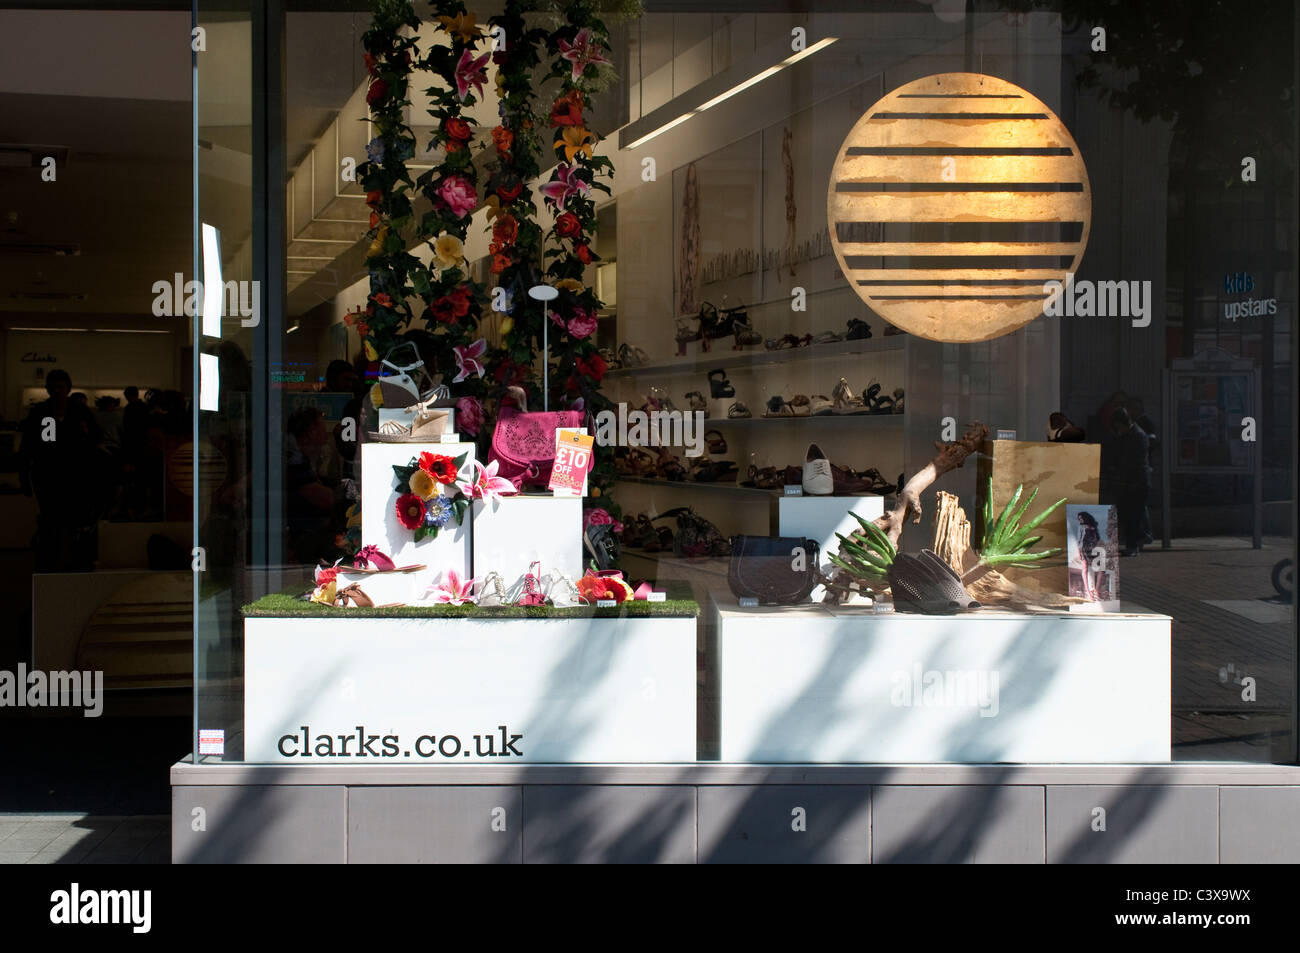 Clarks shoe store, Kingston upon Thames, Surrey, UK Stock Photo - Alamy